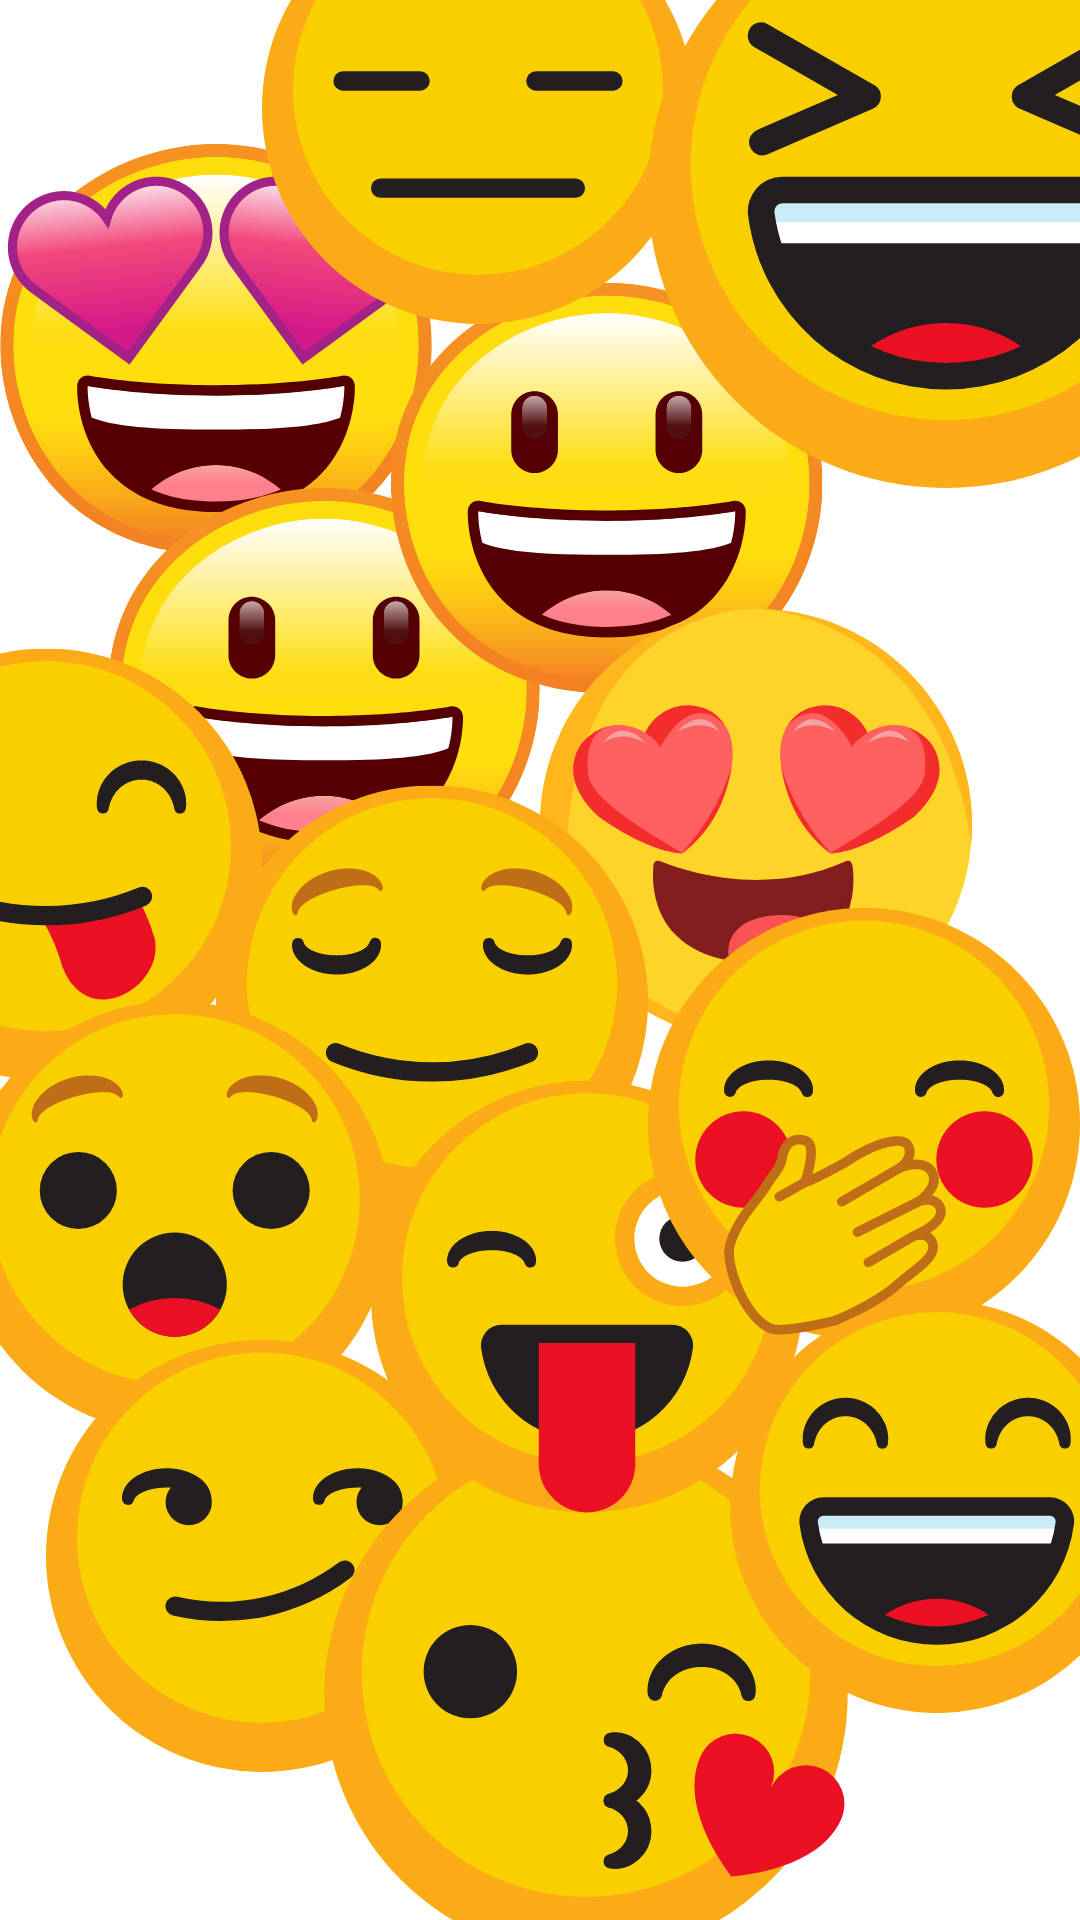 Different Emojis